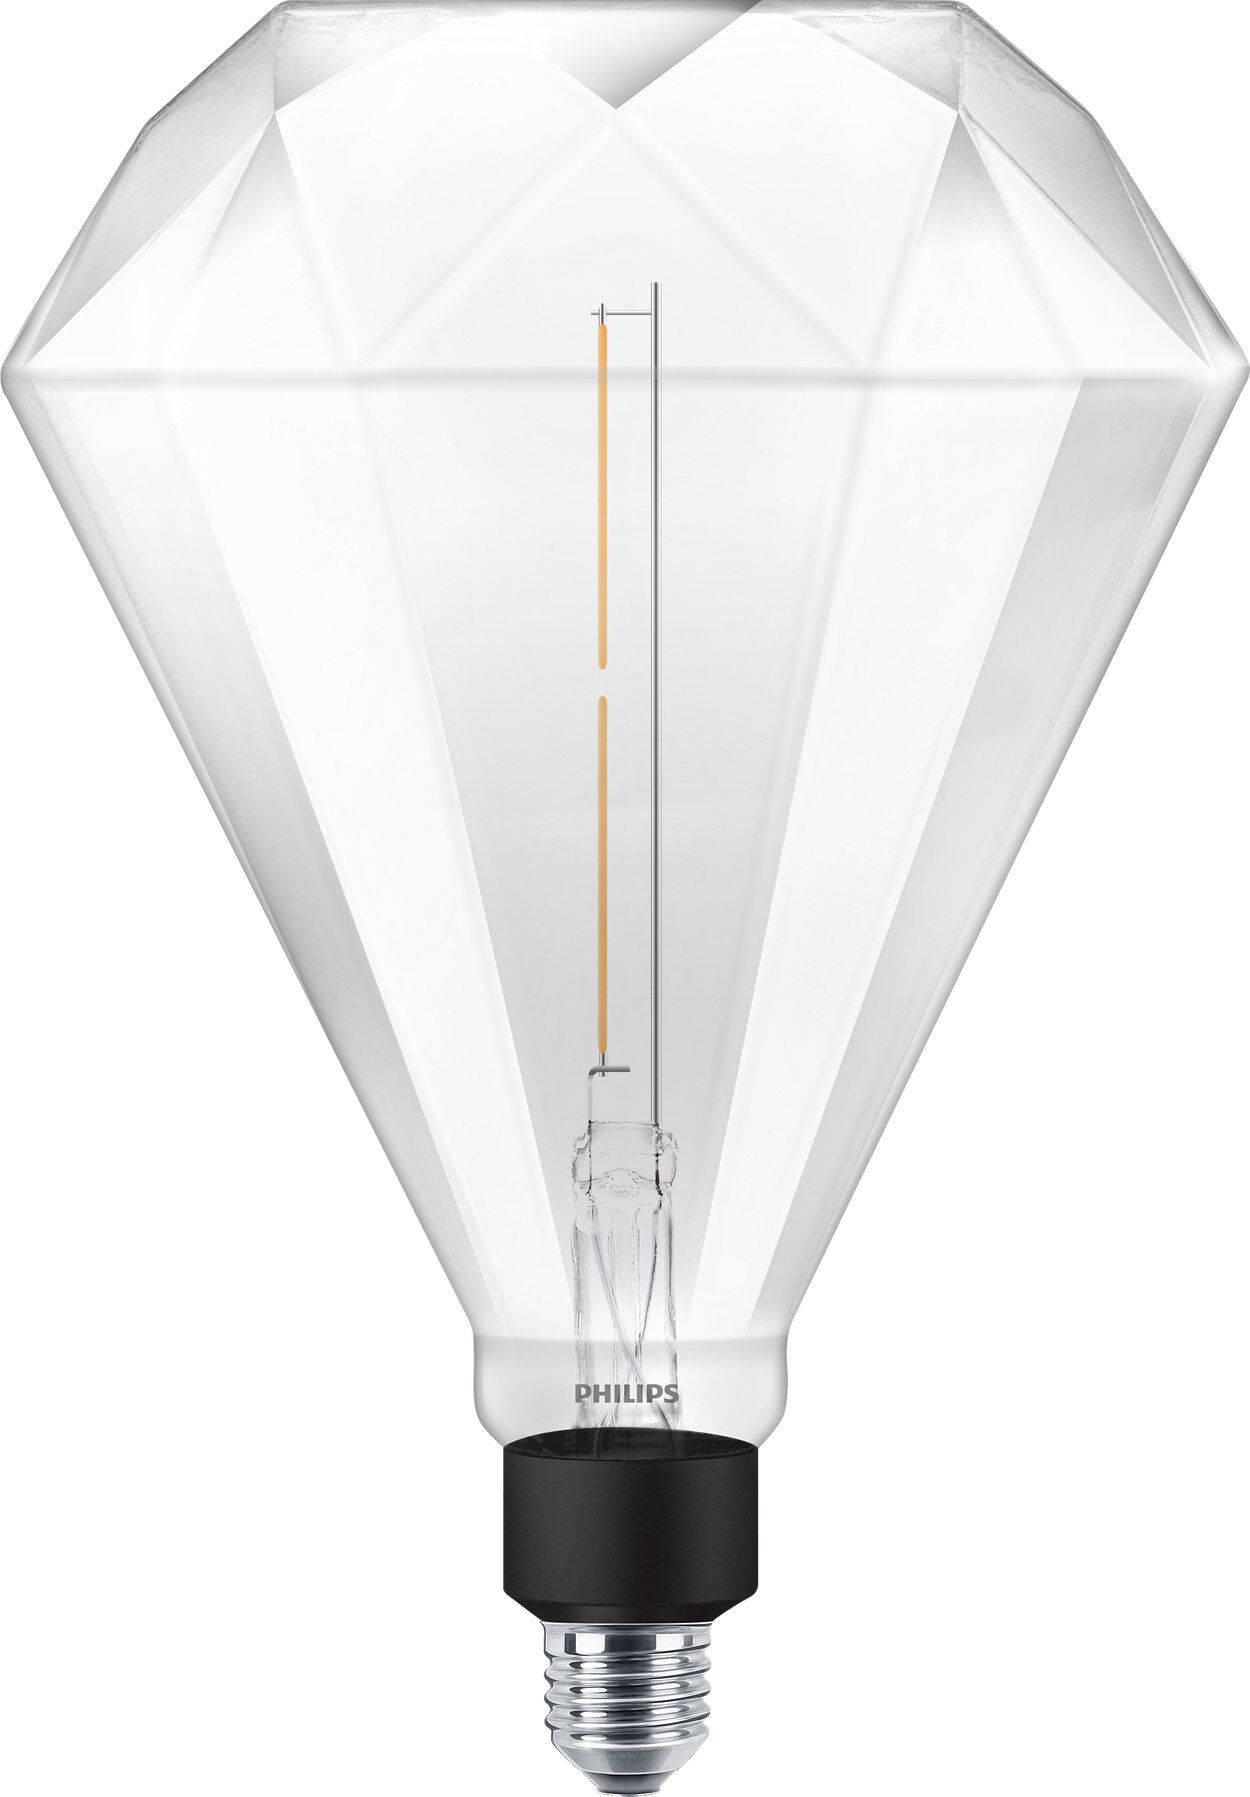 Philips Deco-LED Lampe Giant Diamond 4-35W/830 LED E27 400lm klar warmweiß  dimmbar online kaufen | Leuchtmittelmarkt